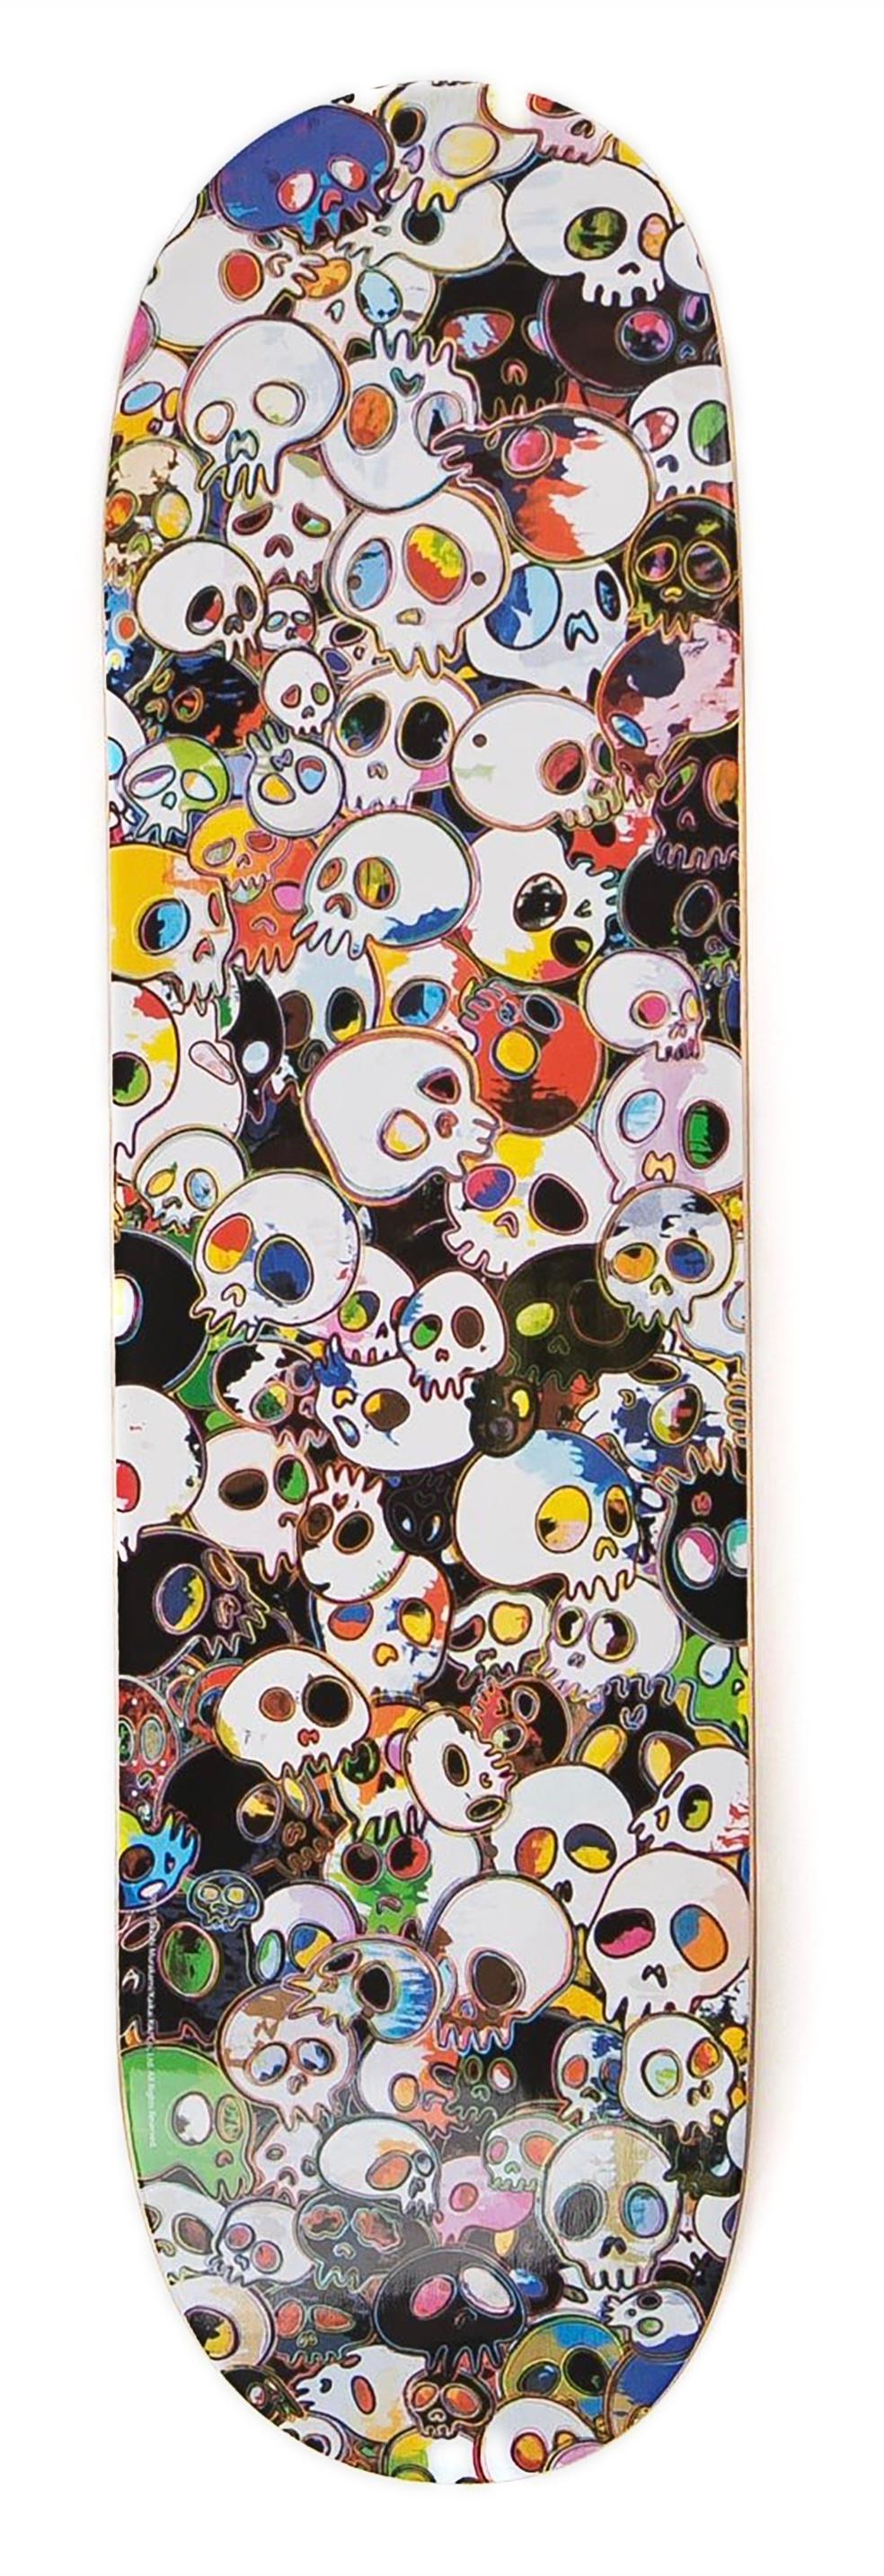 Takashi Murakami Skulls Skateboard Deck  2015:
A vibrant, unique piece of Takashi Murakami  skulls wall-art - this highly collectible limited edition Murakami skateboard was published in 2015 as part of a collaboration between Takashi Murakami &